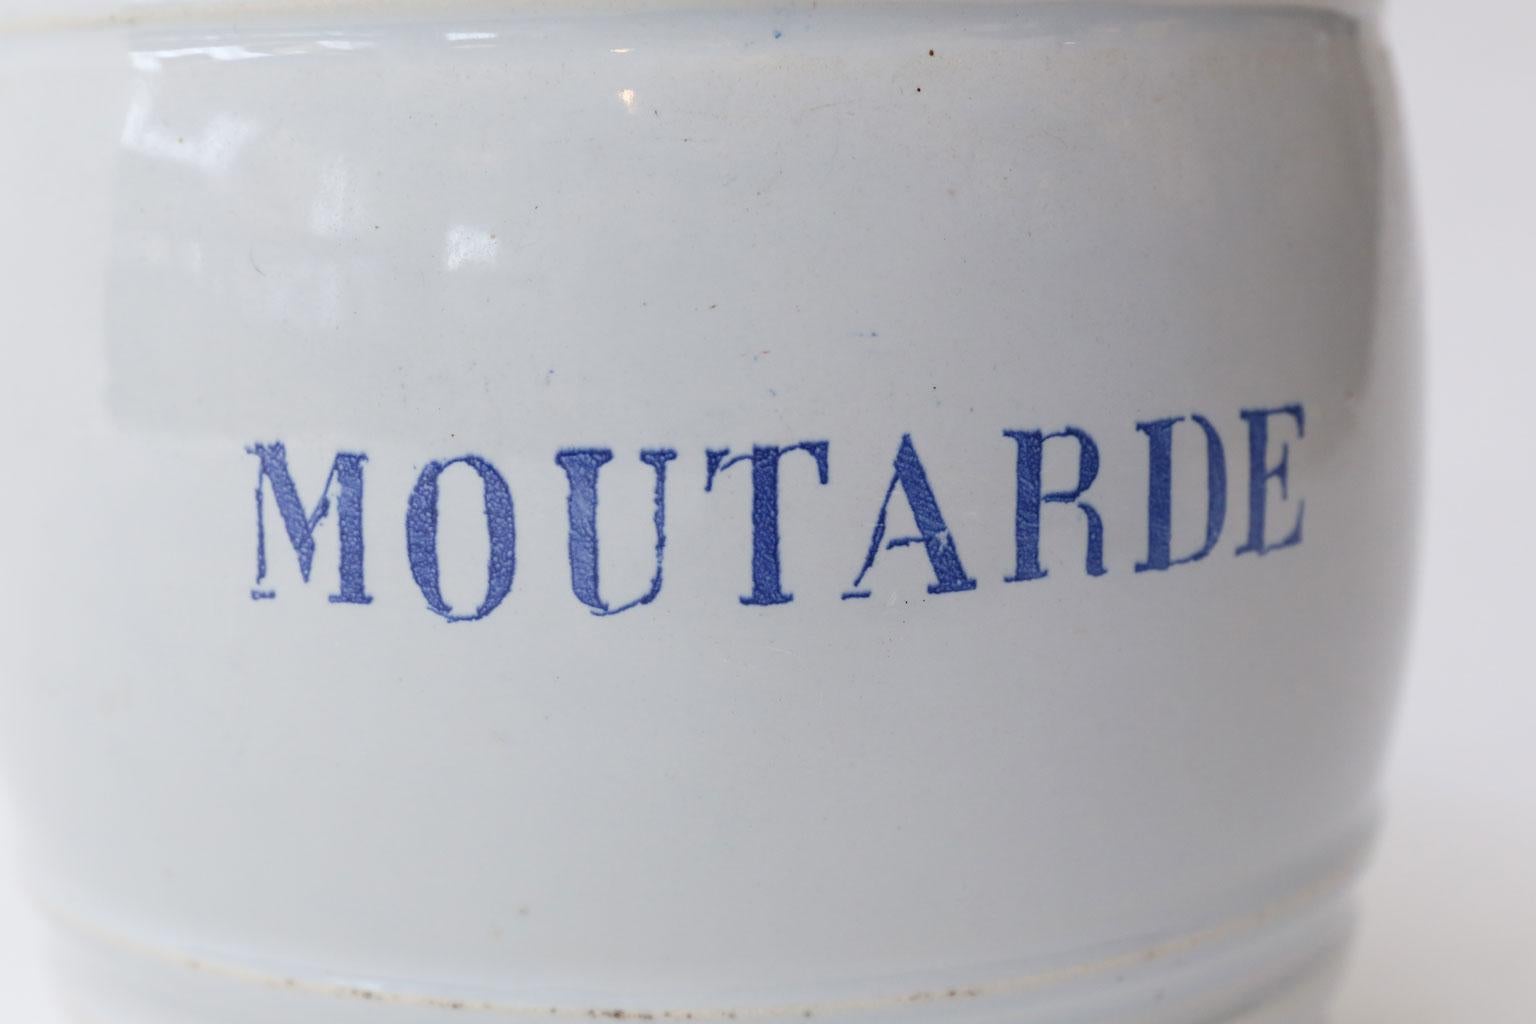 White faience mustard pot (Pot à Moutarde en Faïence): French 19th century ribbed barrel-shape mustard pot in tin-glazed terracotta. Marked 